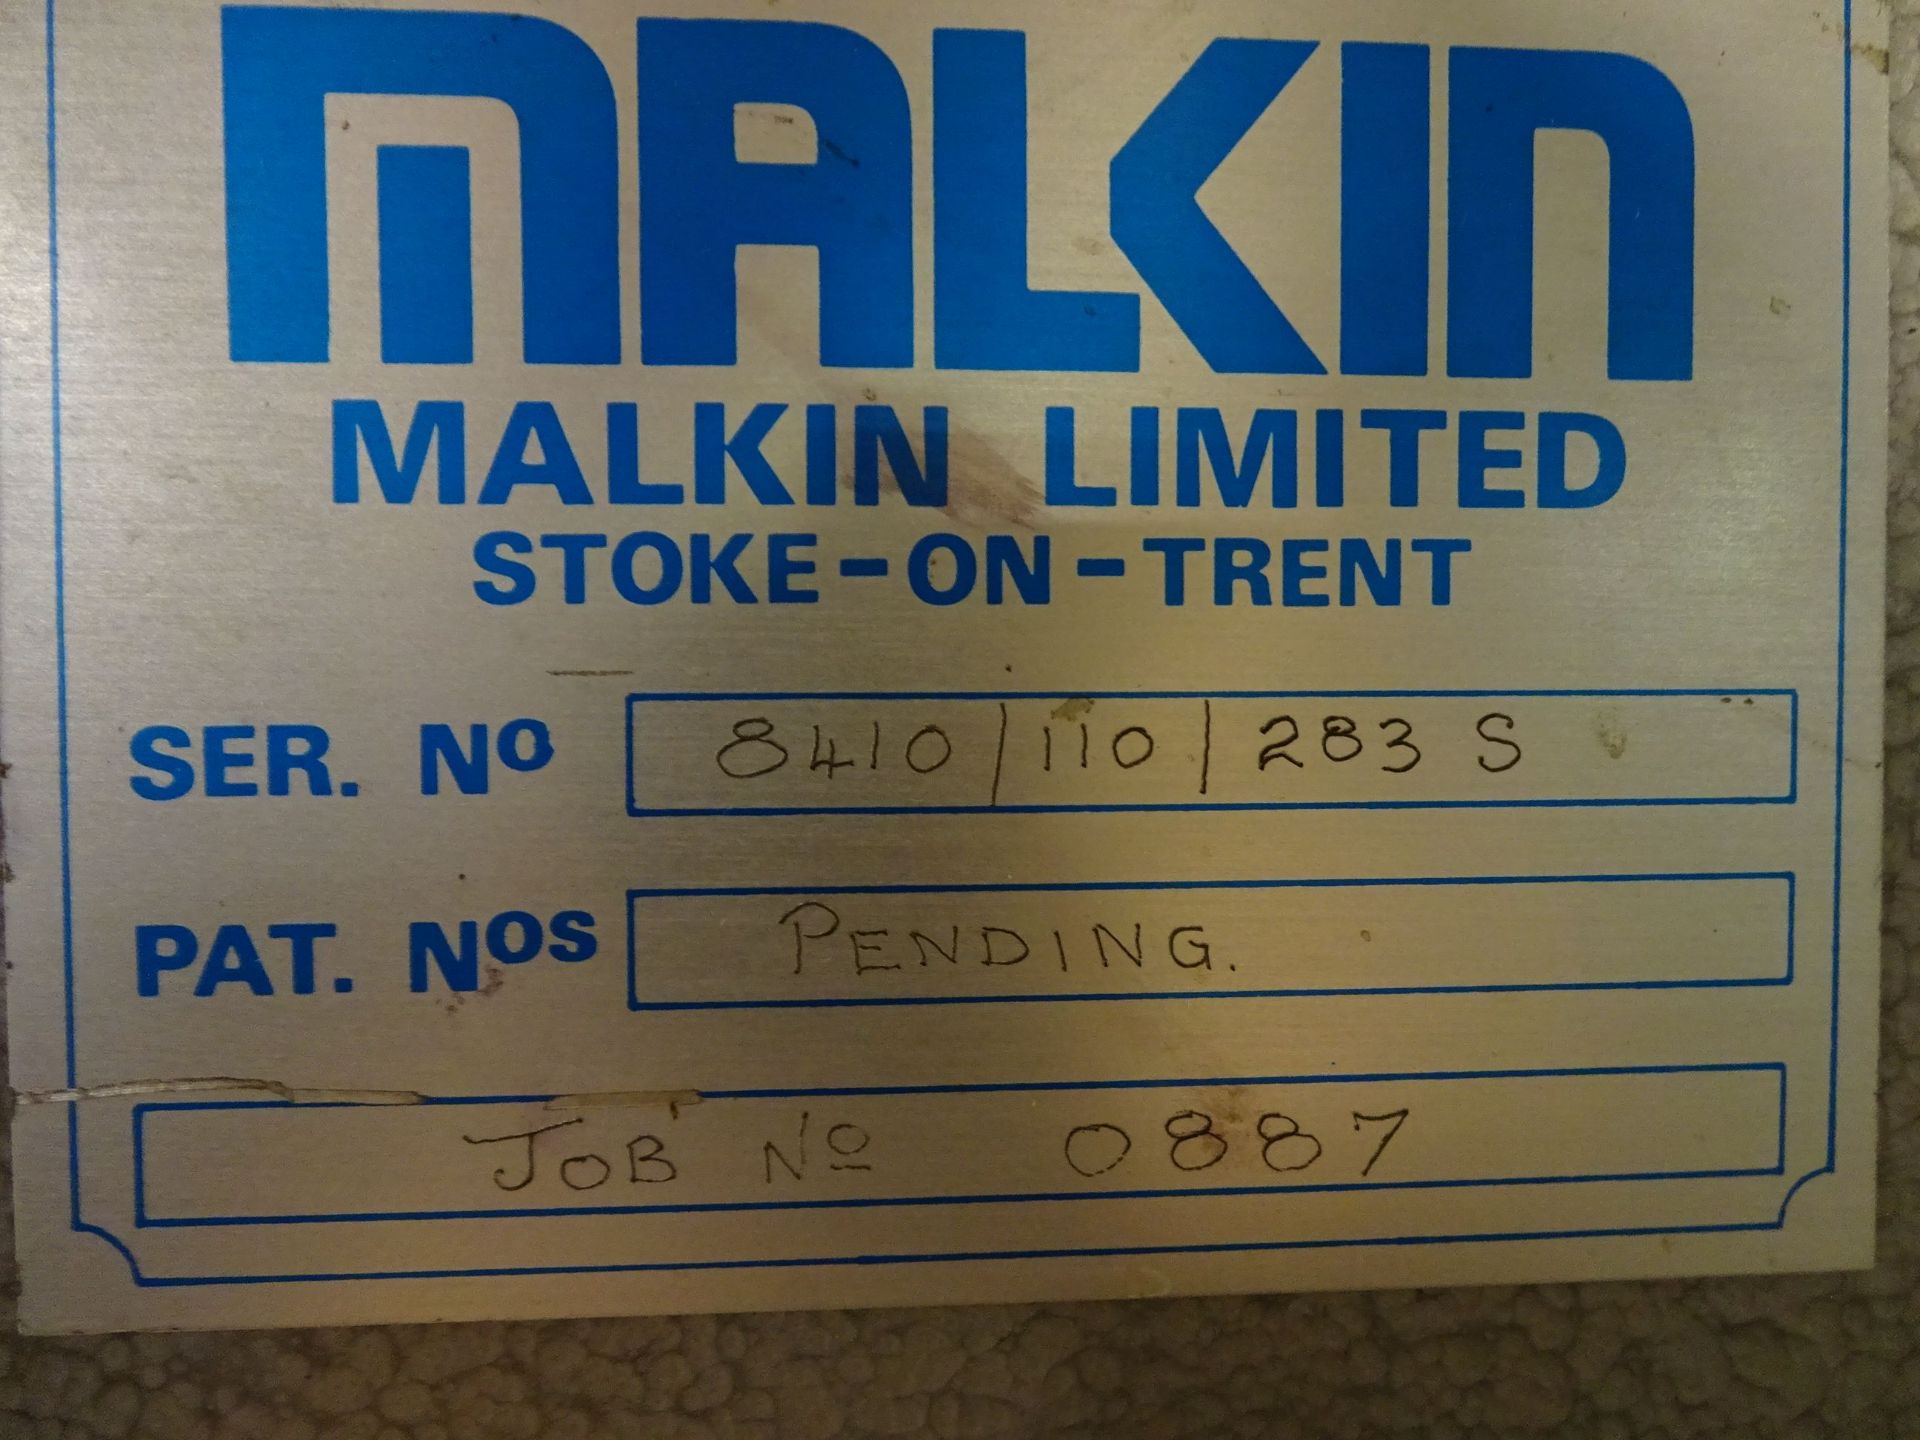 MALKIN JOB NO. 0887 GUILD PLATE APPLICATOR; S/N 8410/110/2835 - Image 6 of 6